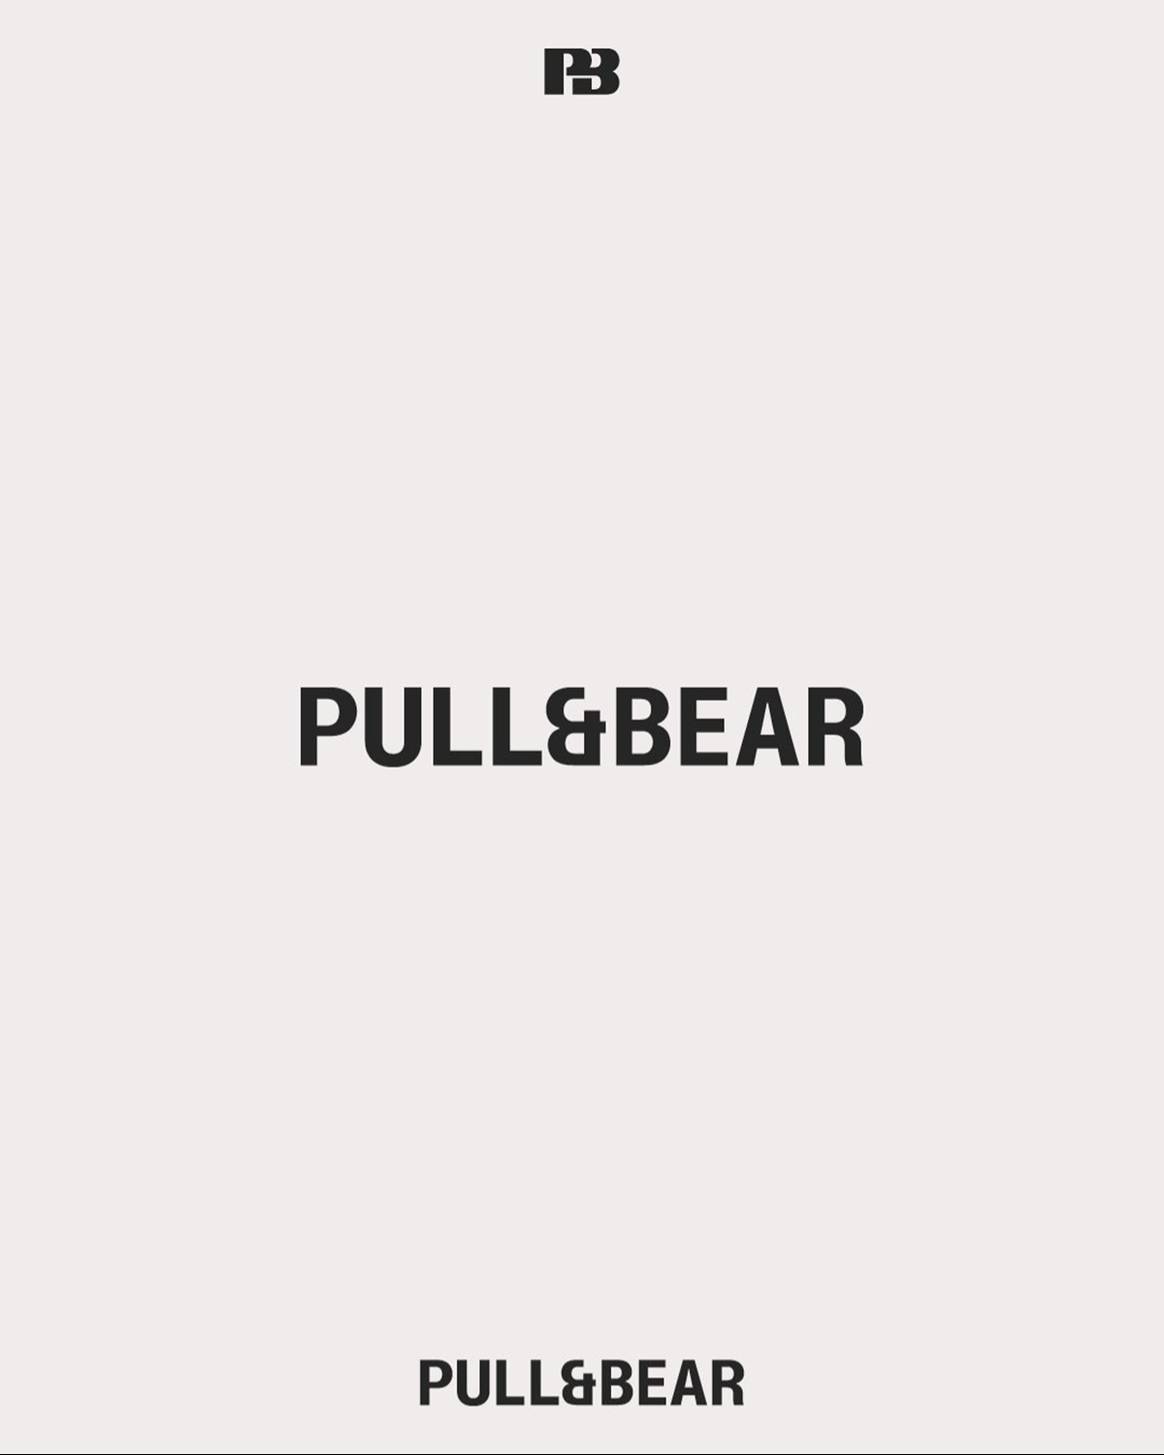 Photo Credits: Nuevo logo de Pull&Bea, vía Córdova Canillas.